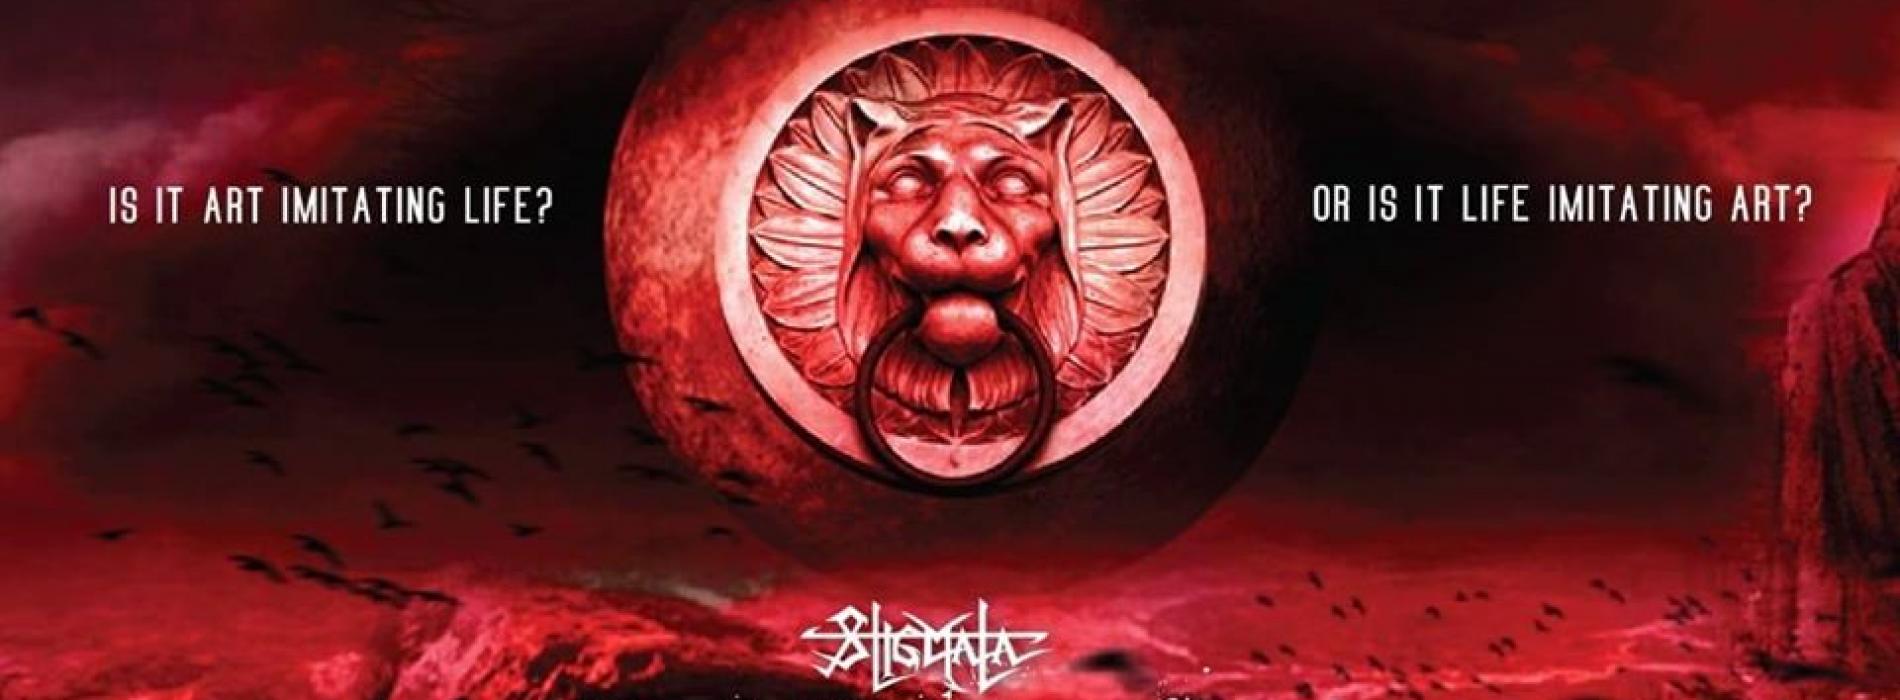 News : Stigmata To Release Single #2 For 2020!